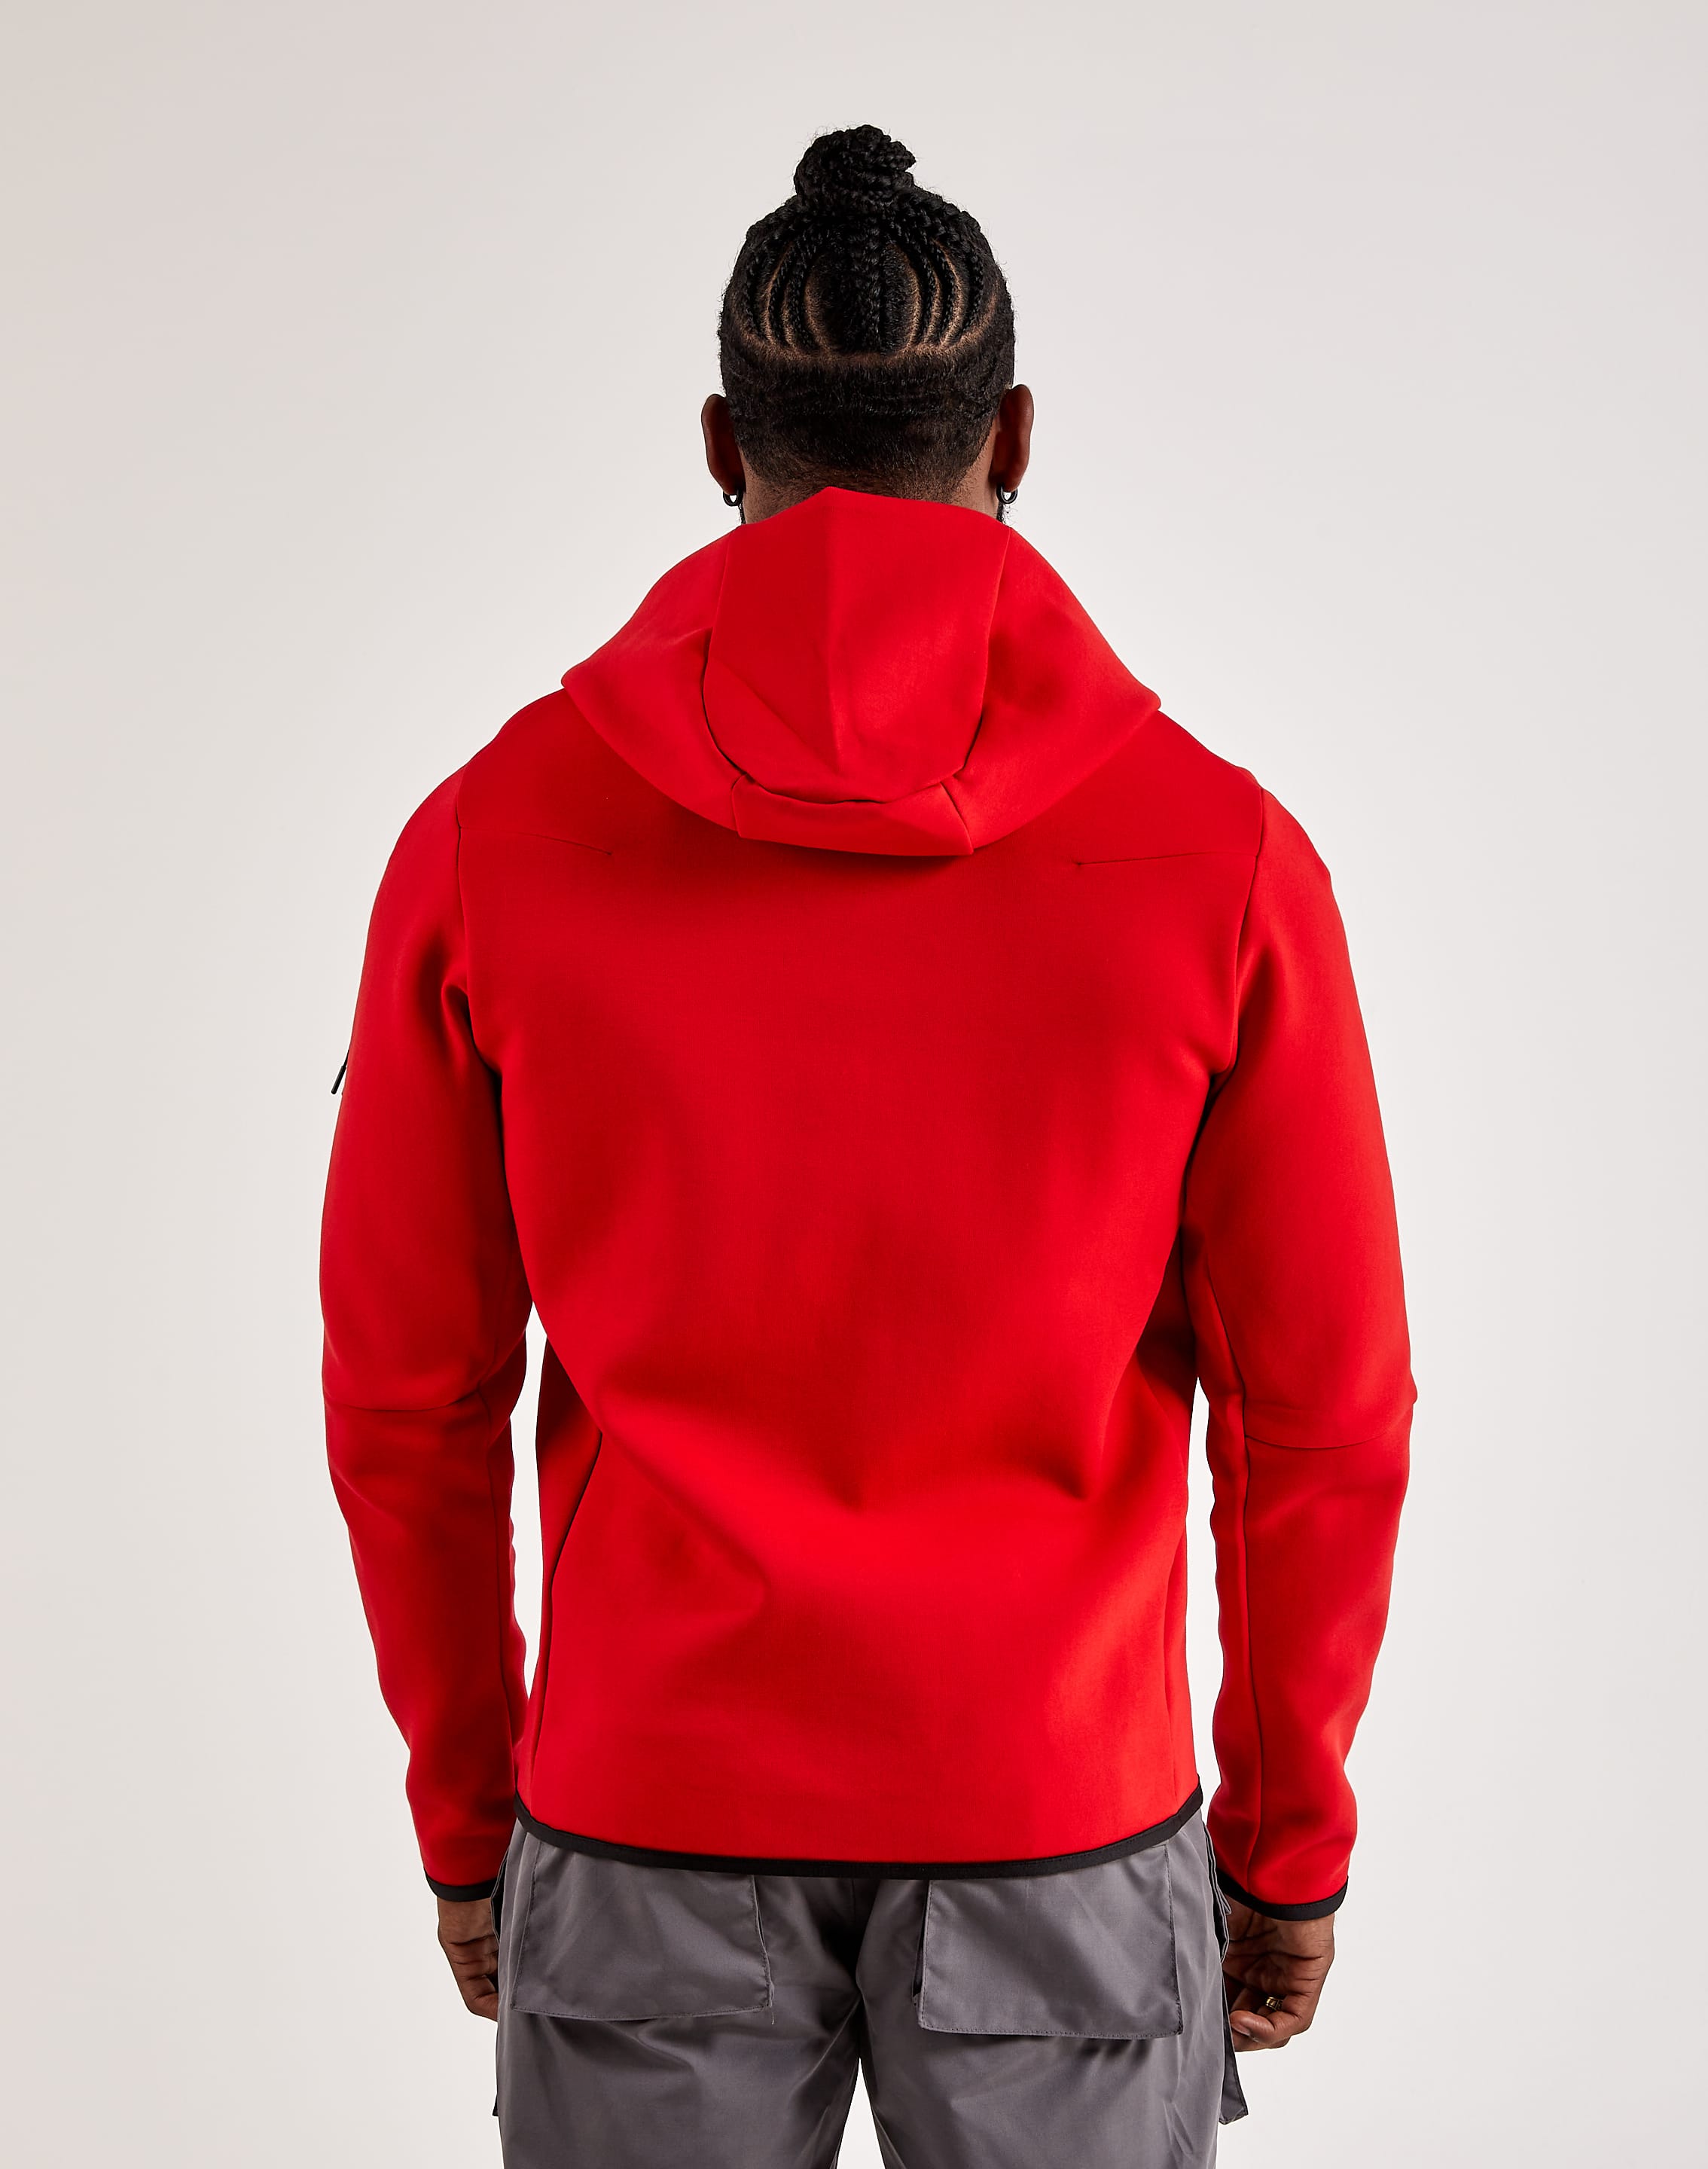 Nike Tech Fleece Tracksuit SET Taped CU4489 657 UNIVERSITY RED SIZES XL AND  XXL